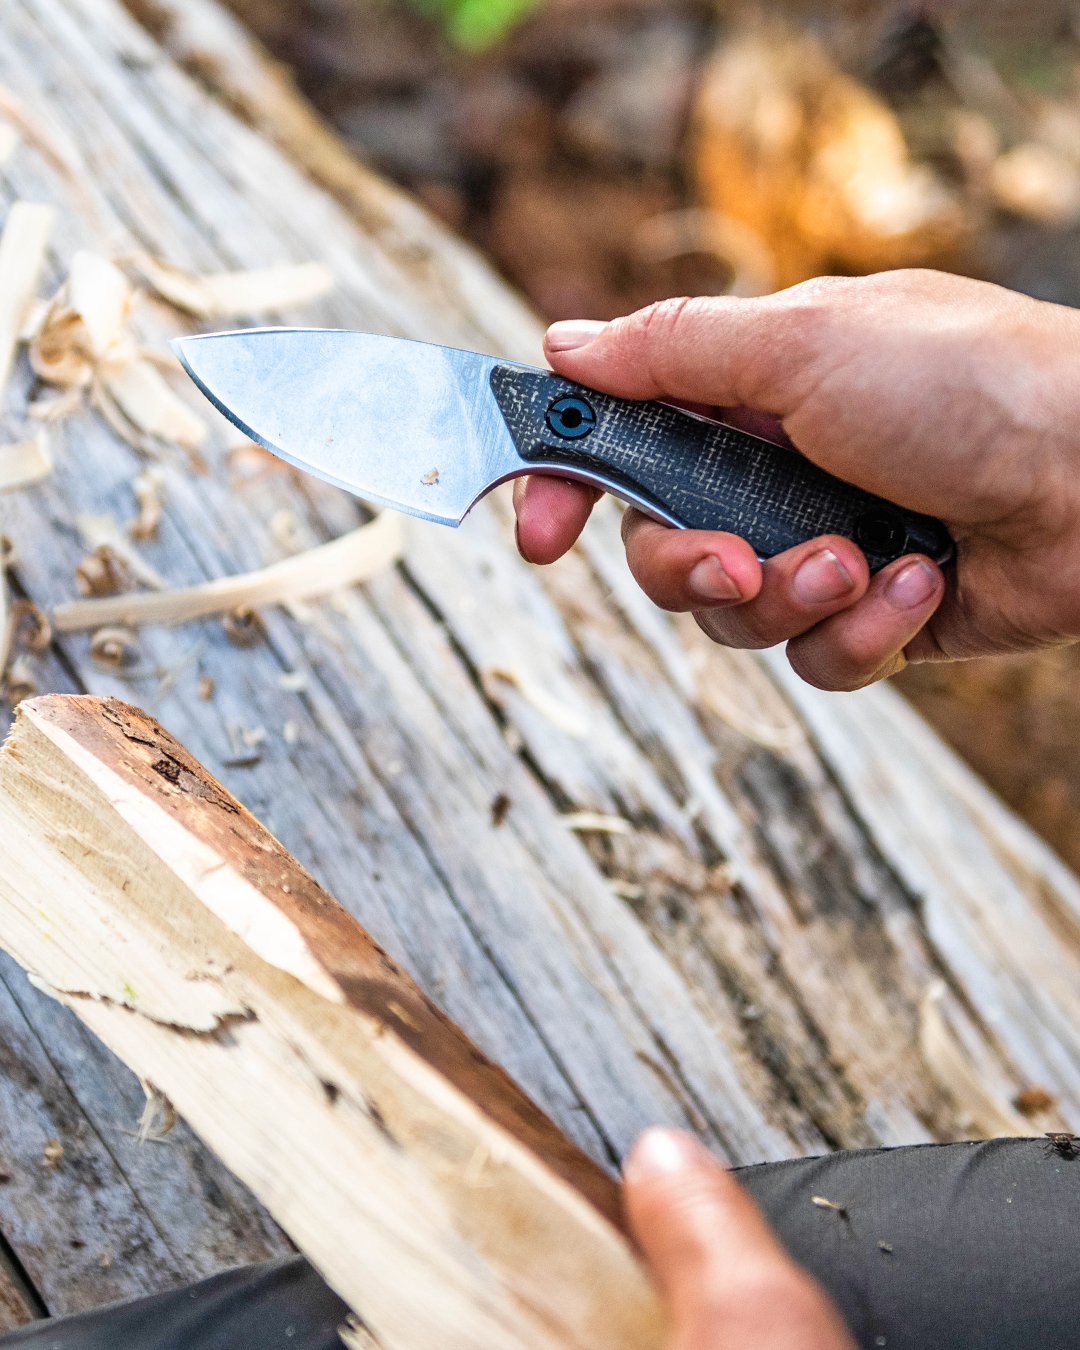 Stowe Fixed Blade Knife